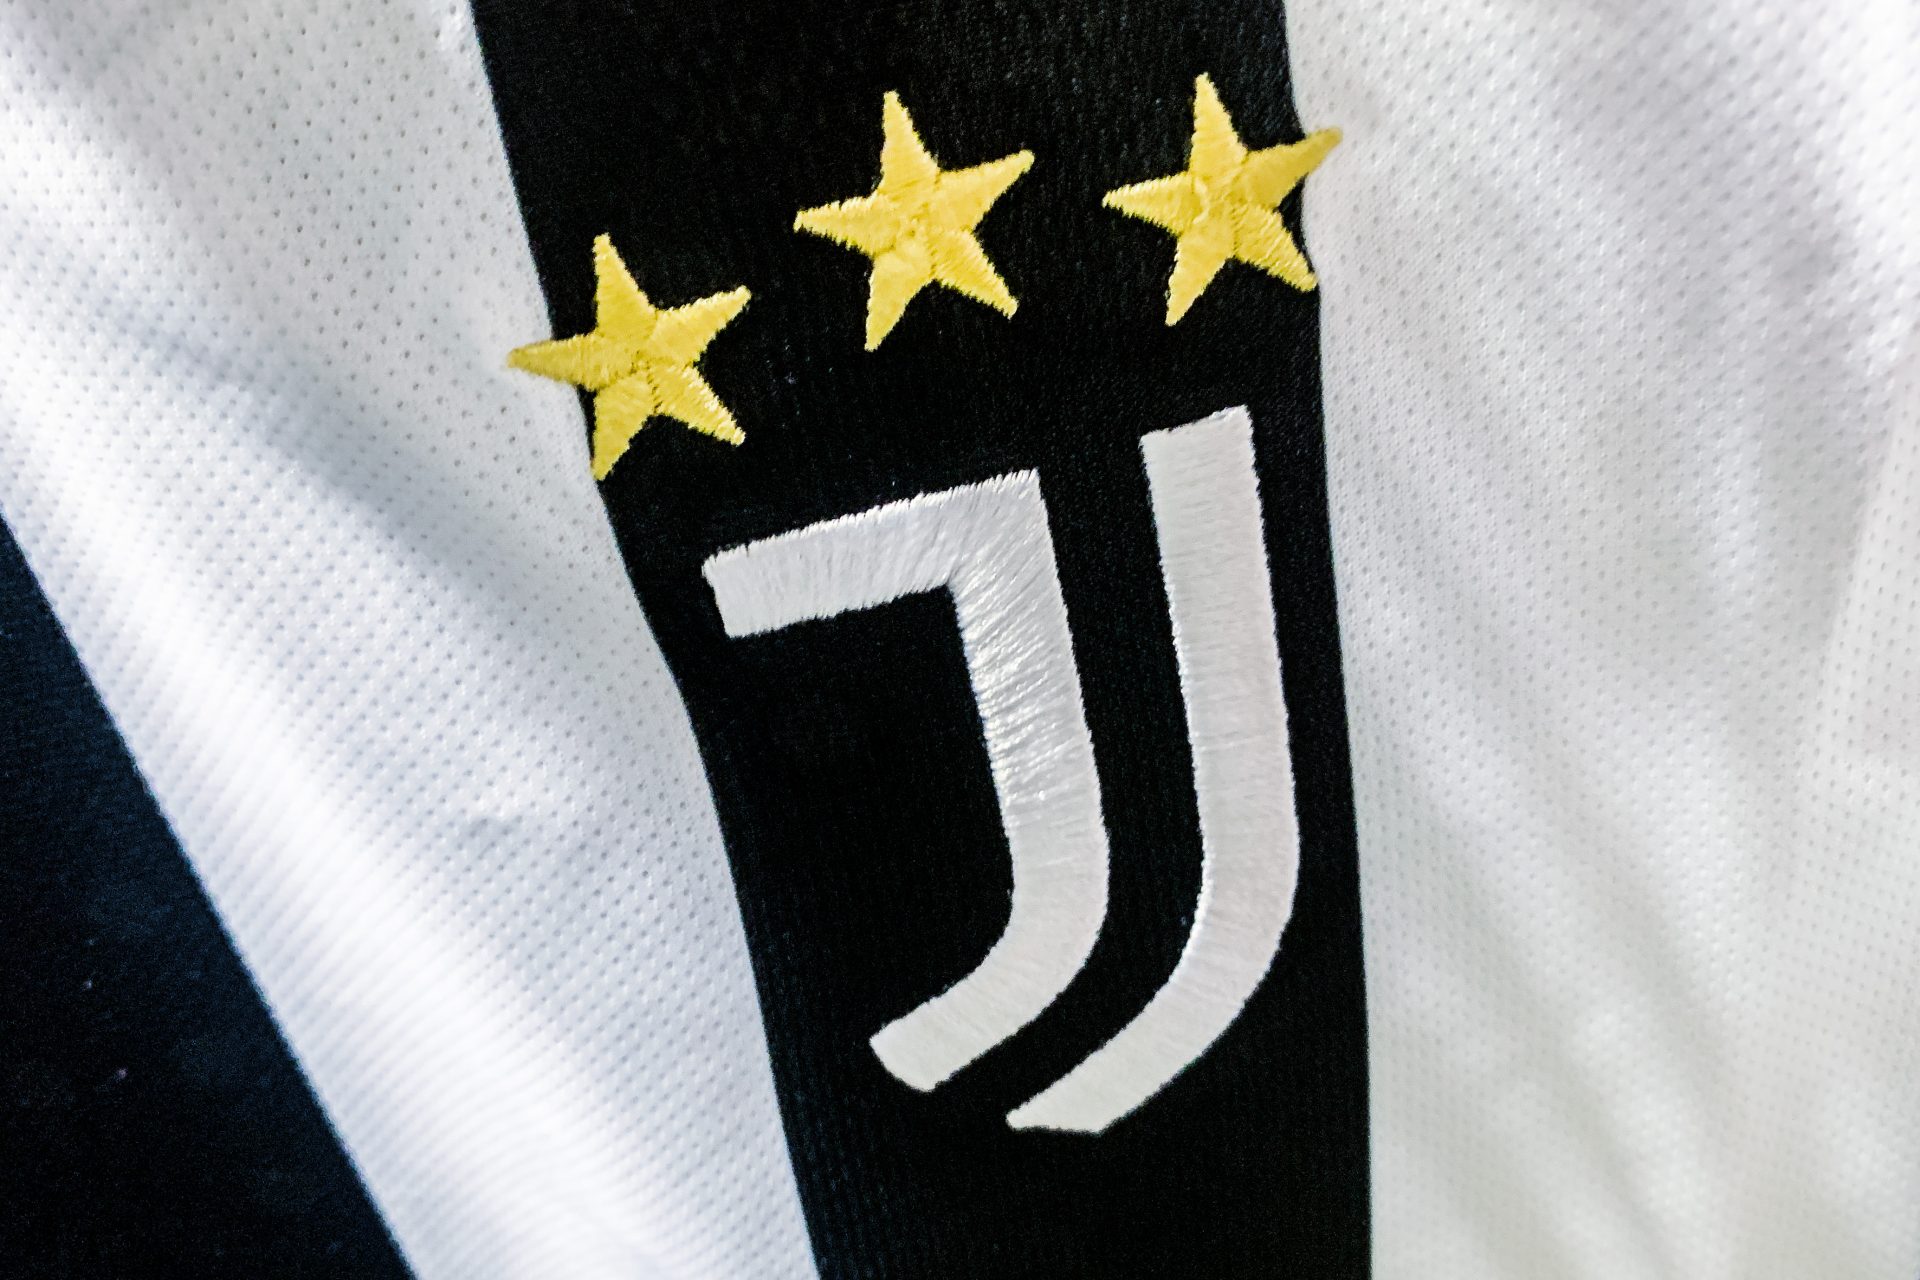 Juventus release their own statement